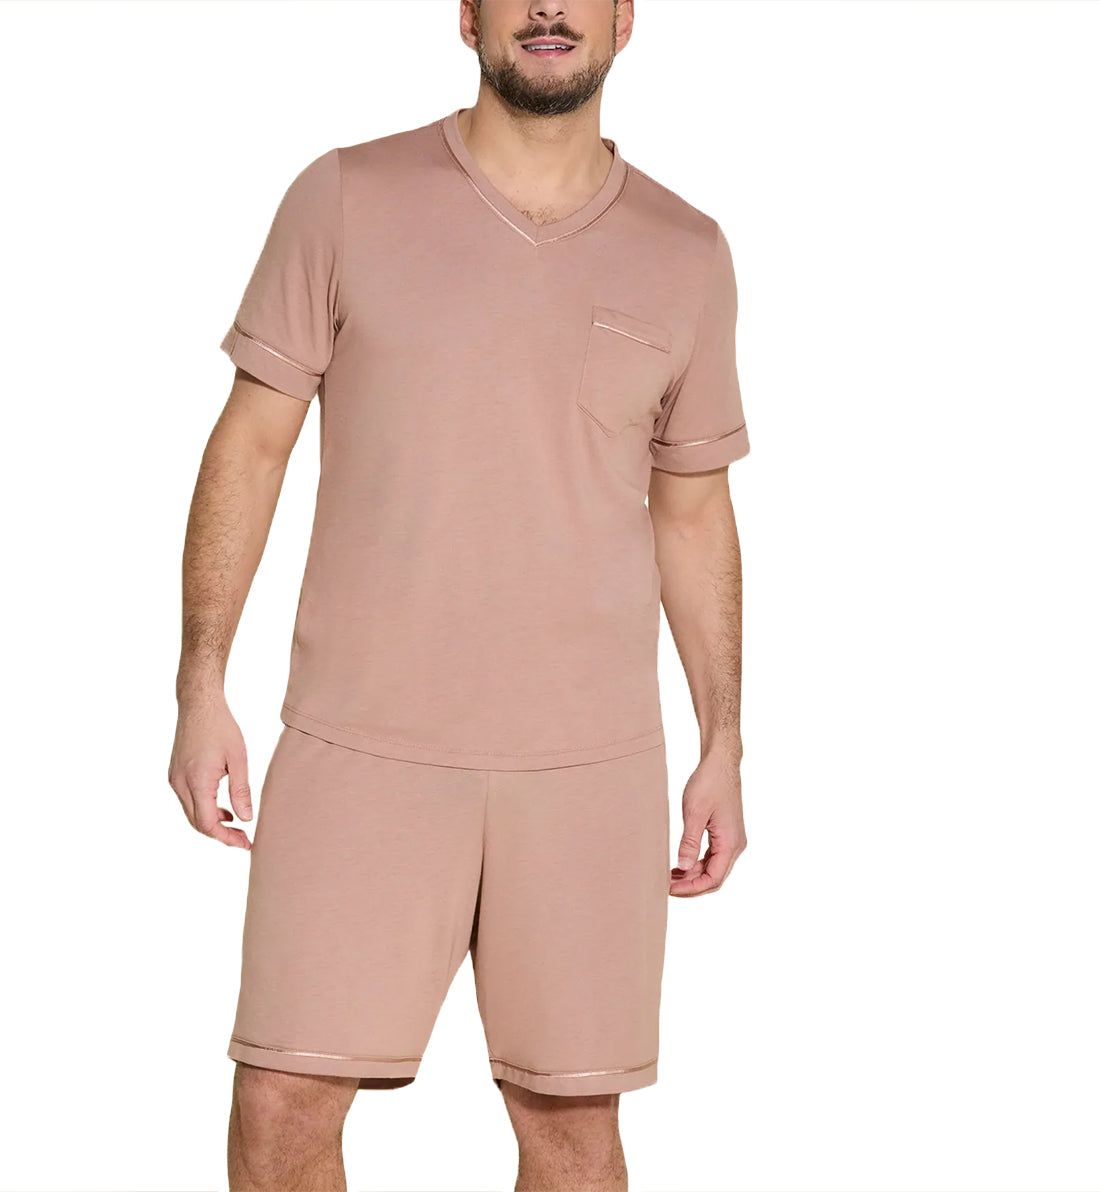 Cosabella Men's Short Sleeve V-Neck Shirt & Short PJ Set (AMORE9421),S,India - India,Small